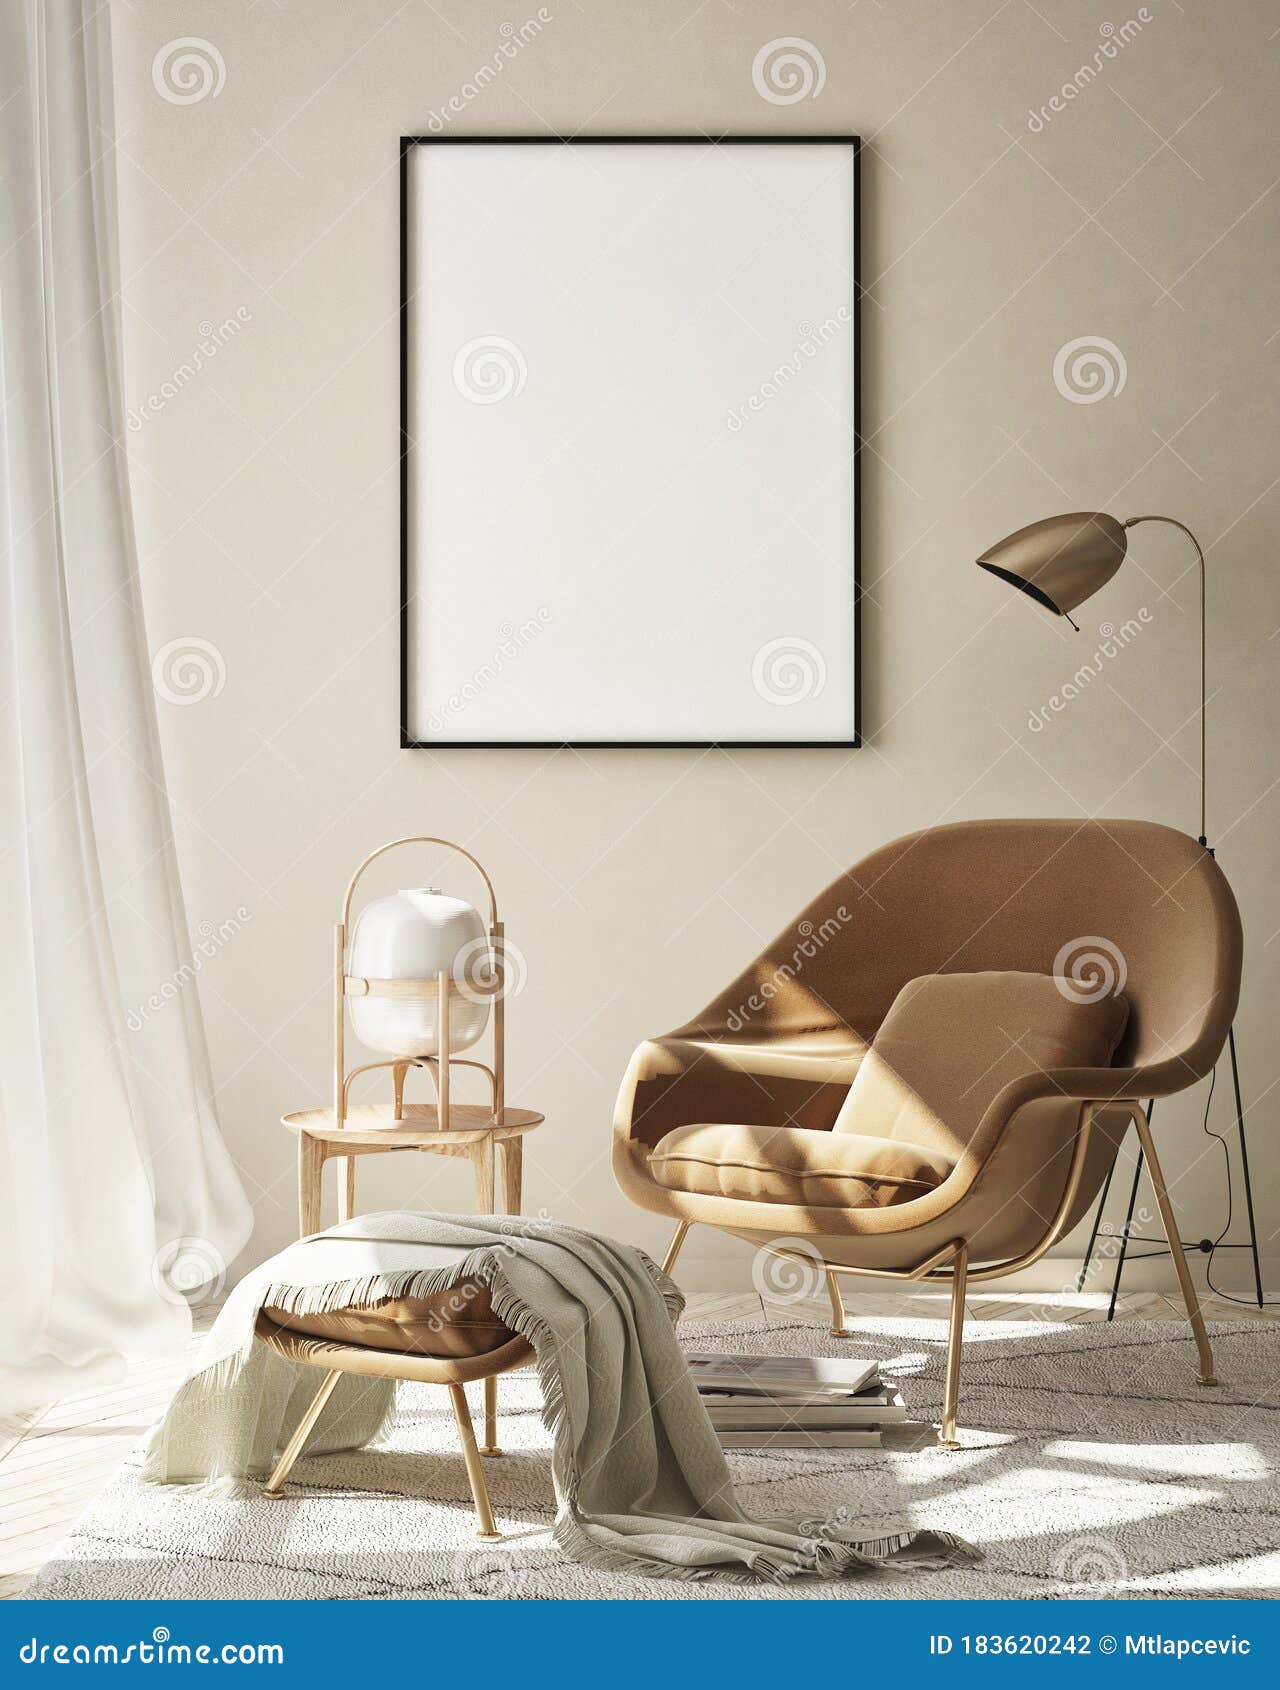 mock up poster frame in modern interior background, livingroom, scandinavian style, 3d render